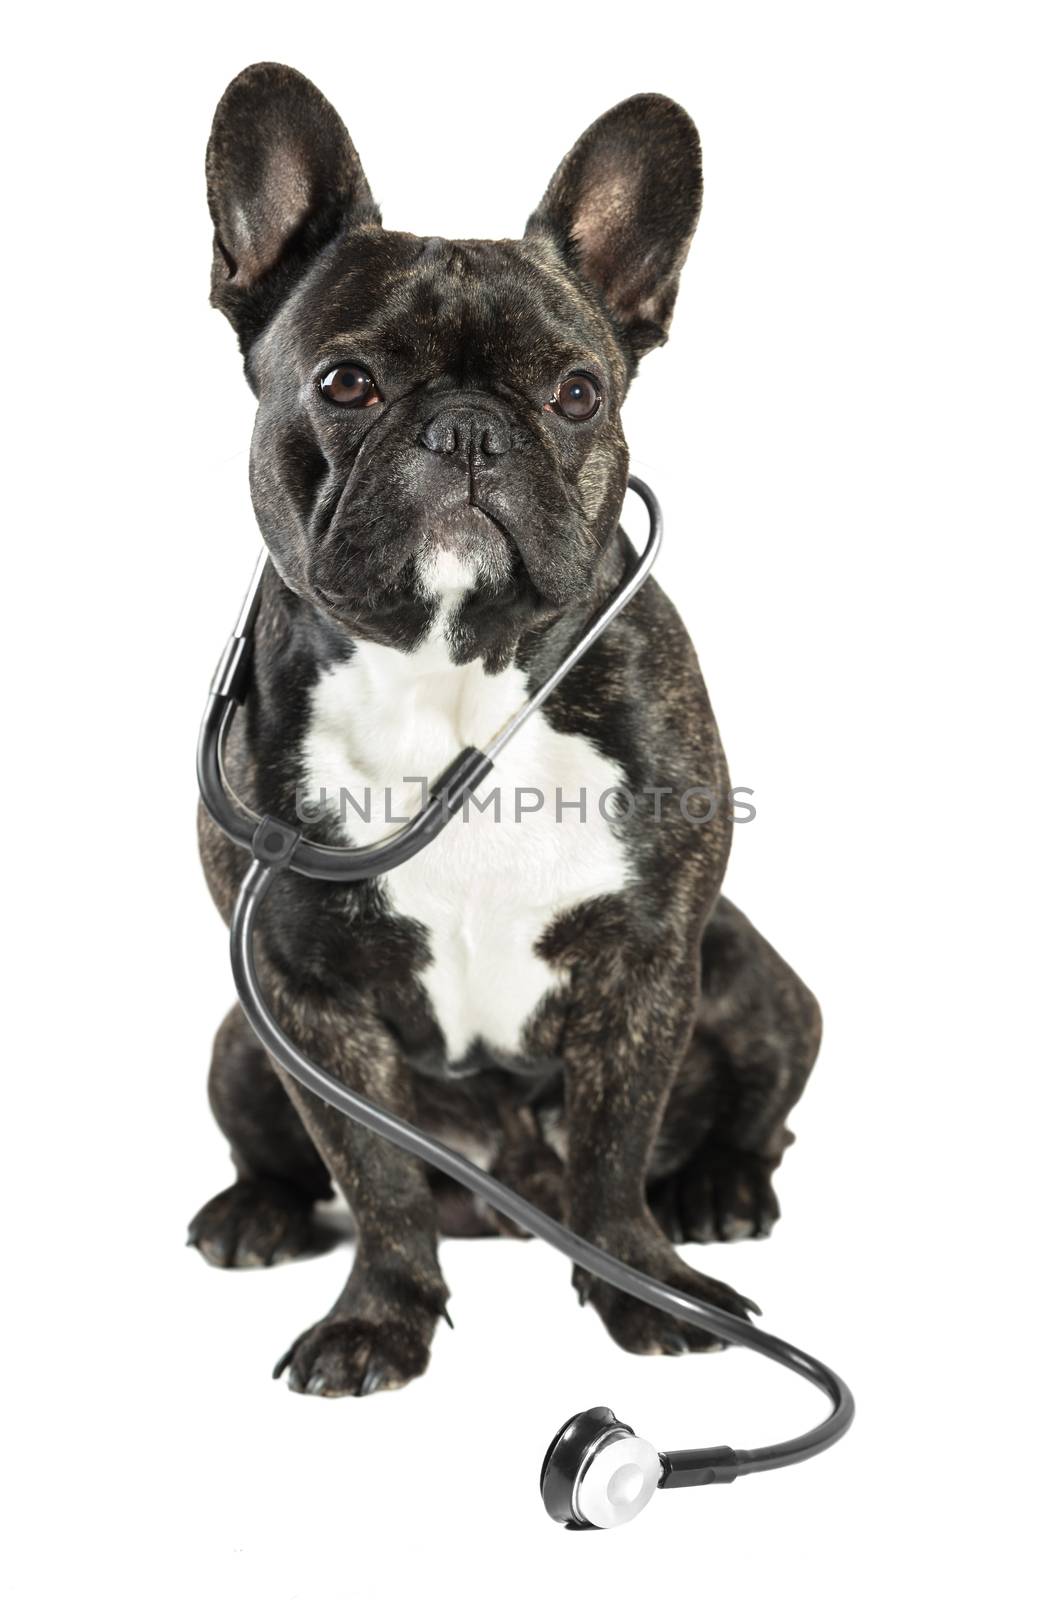 French bulldog with stethoscope on neck, white background